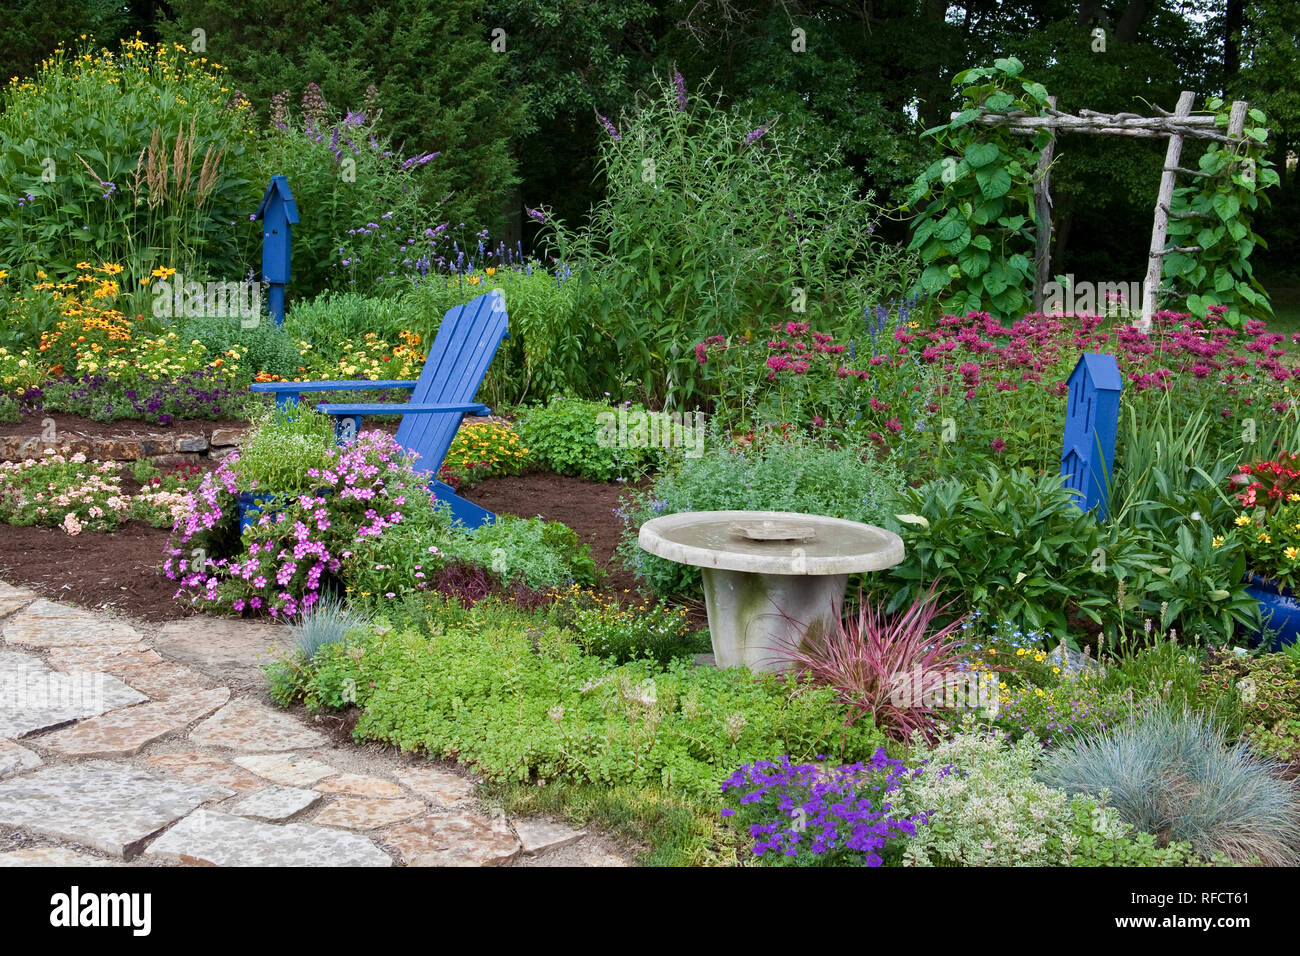 63821-21812 Flower garden with stone path, blue Adirondack chair, bird bath, butterfly house, bird house, and trellis, Purple Verbena, sedums, blue fe Stock Photo